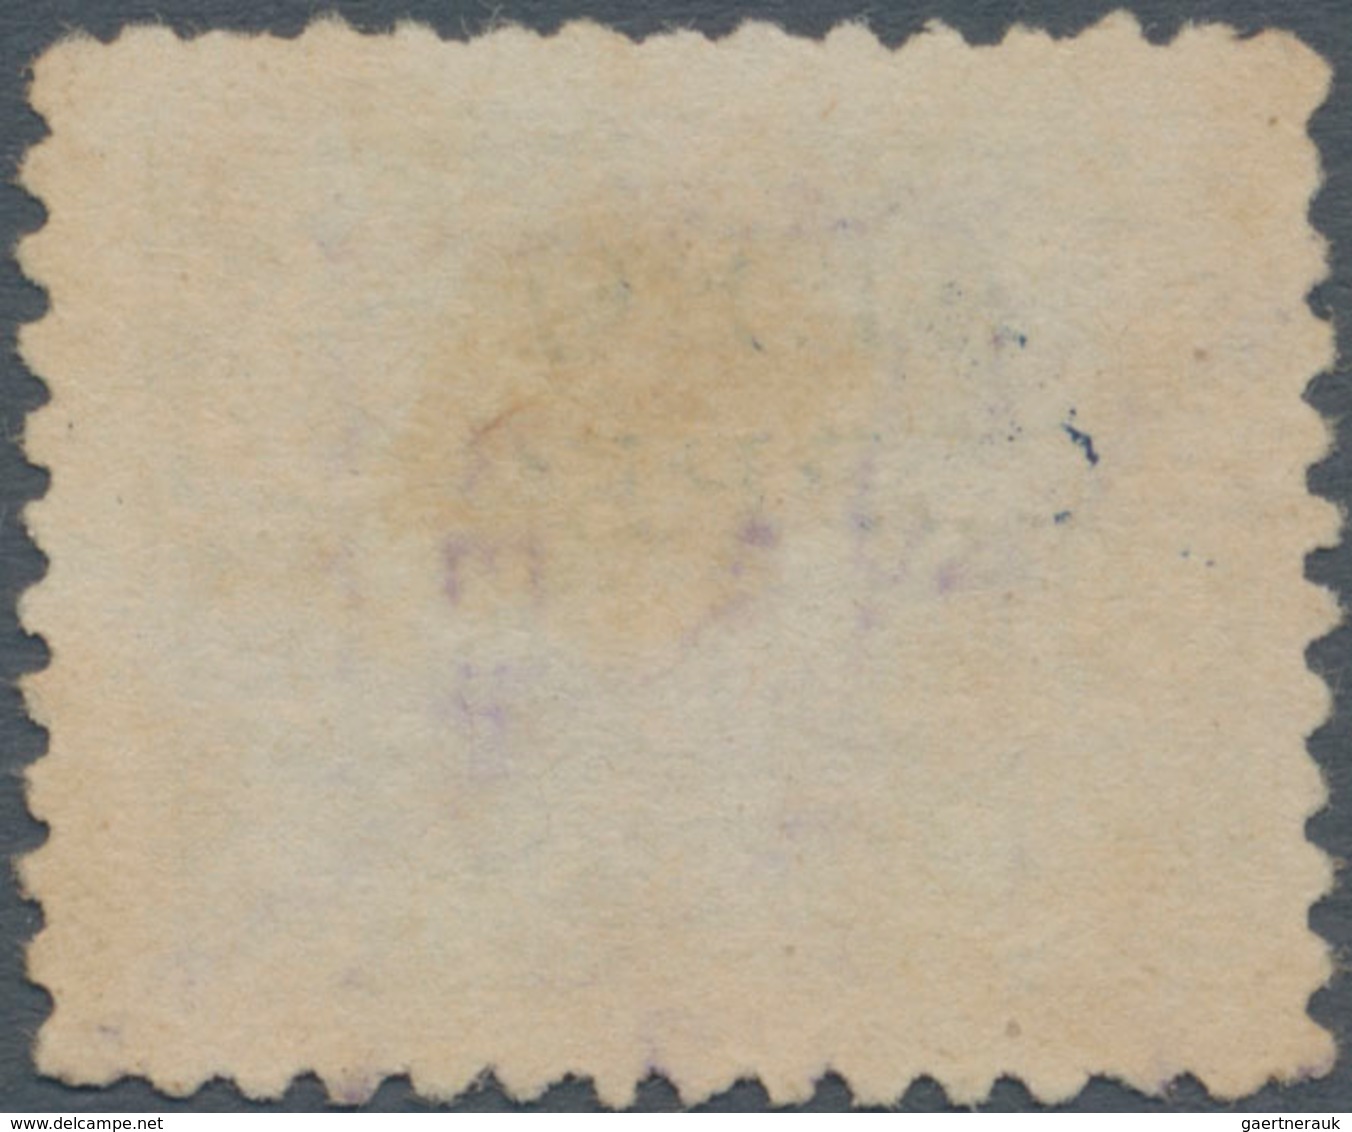 Honduras: 1925, Airmail Issue 5c. Pale Blue With BLUE Overprint ‚AERO / CORREO‘, Unused Without Gum - Honduras